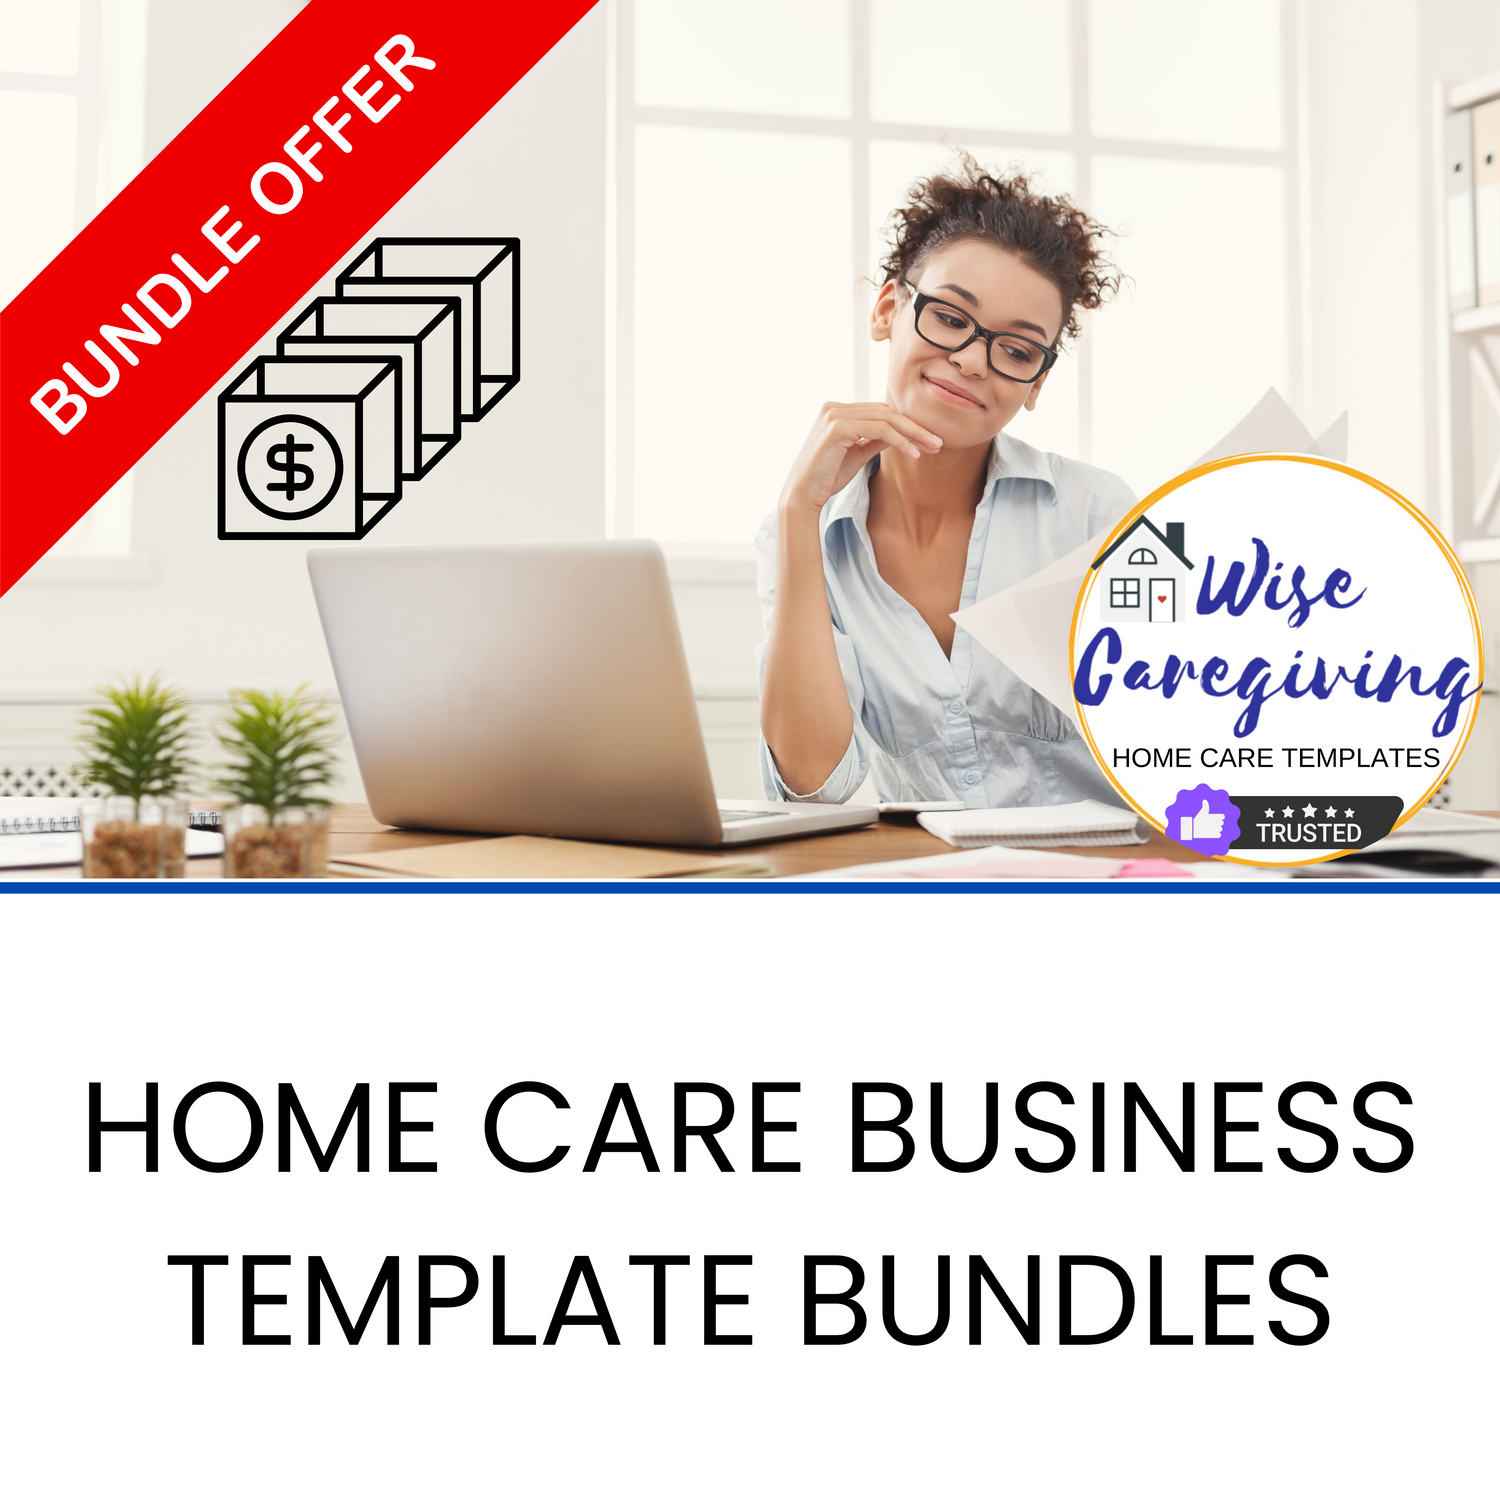 Home Care Business Template Bundles